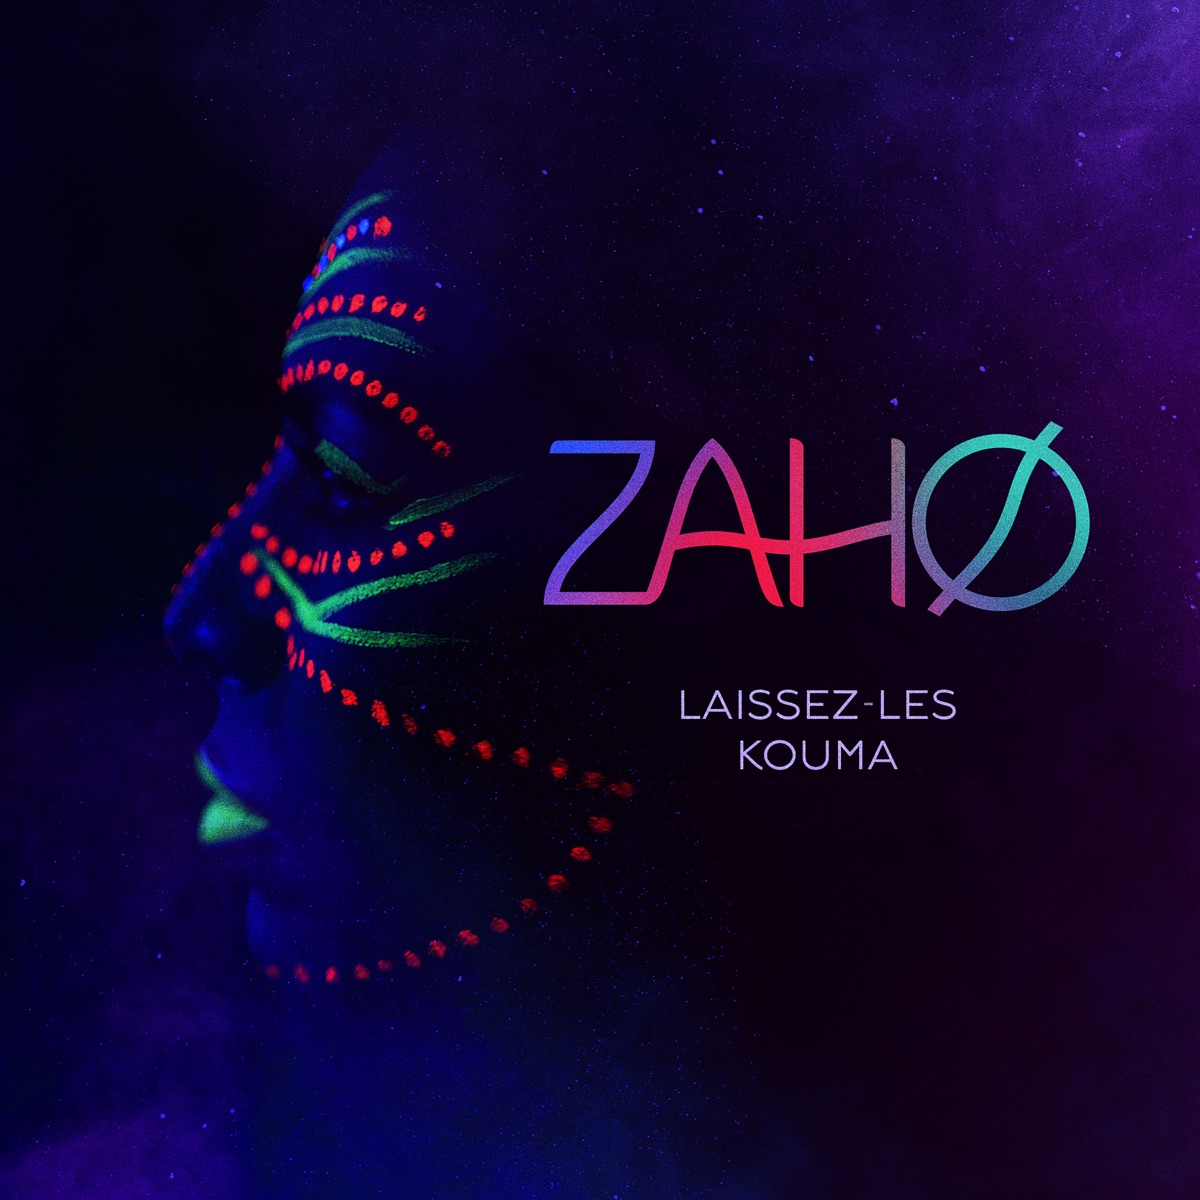 ‎Laissez-les kouma (feat. MHD) - Single by Zaho on Apple Music